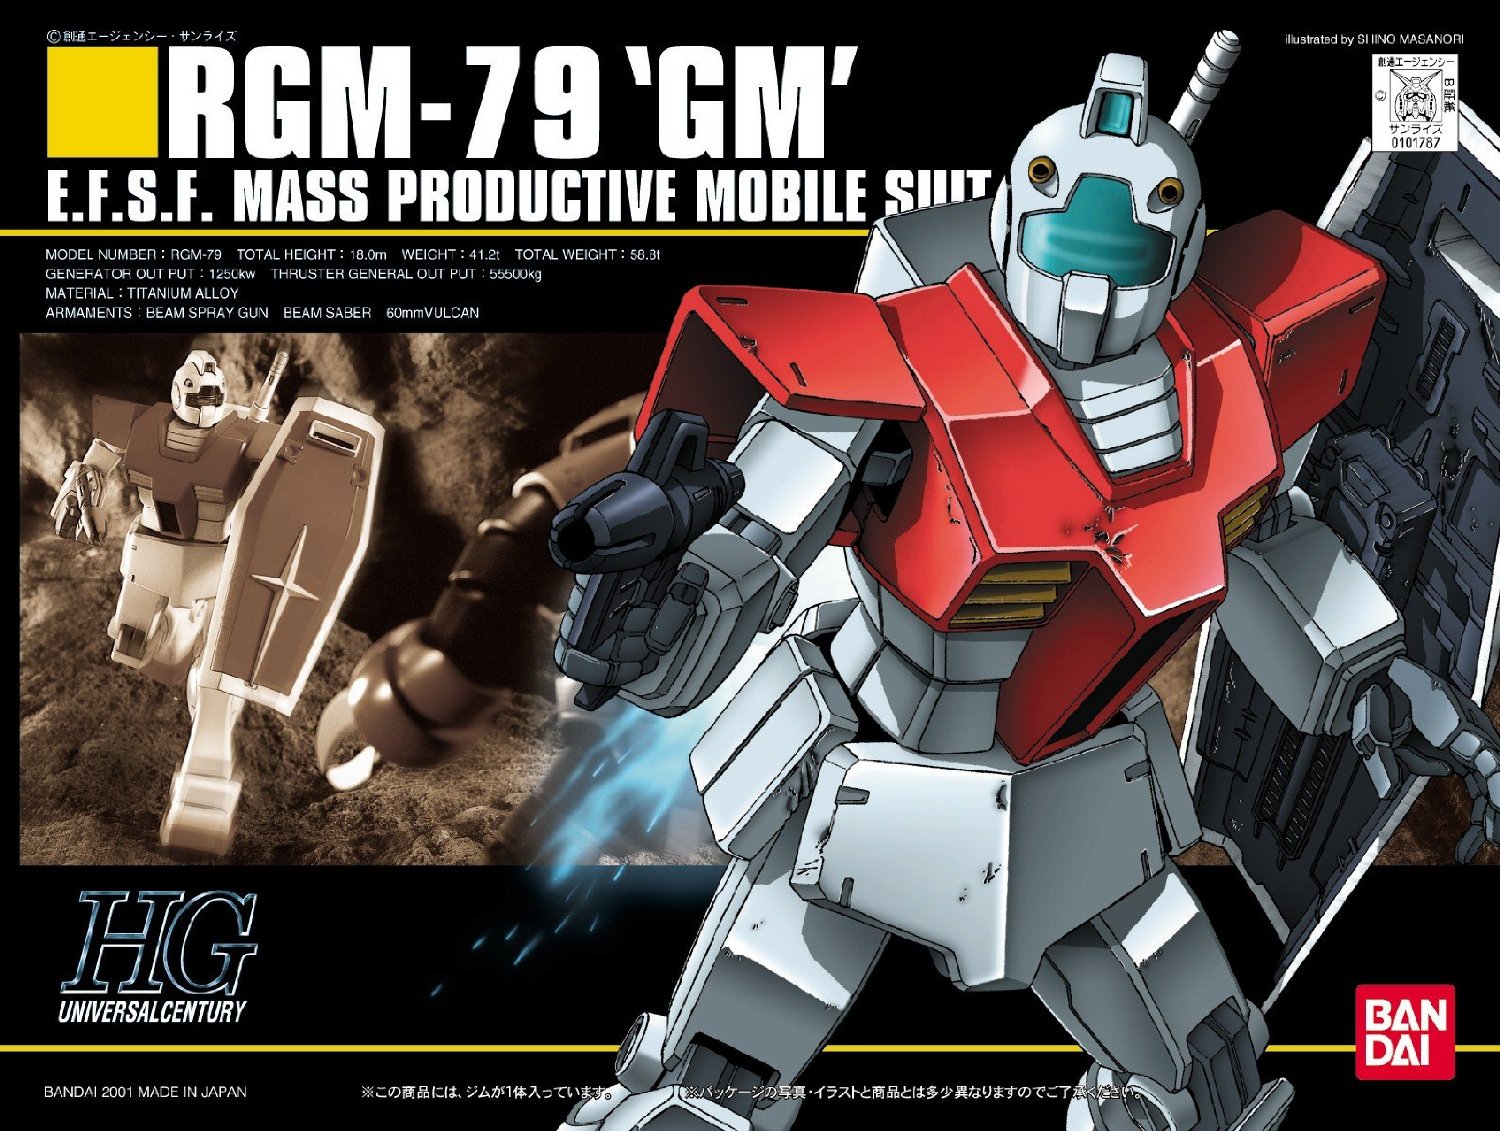 Gundam 1/144 #020 HGUC Universal Century RGM-79 GM Model Kit 1